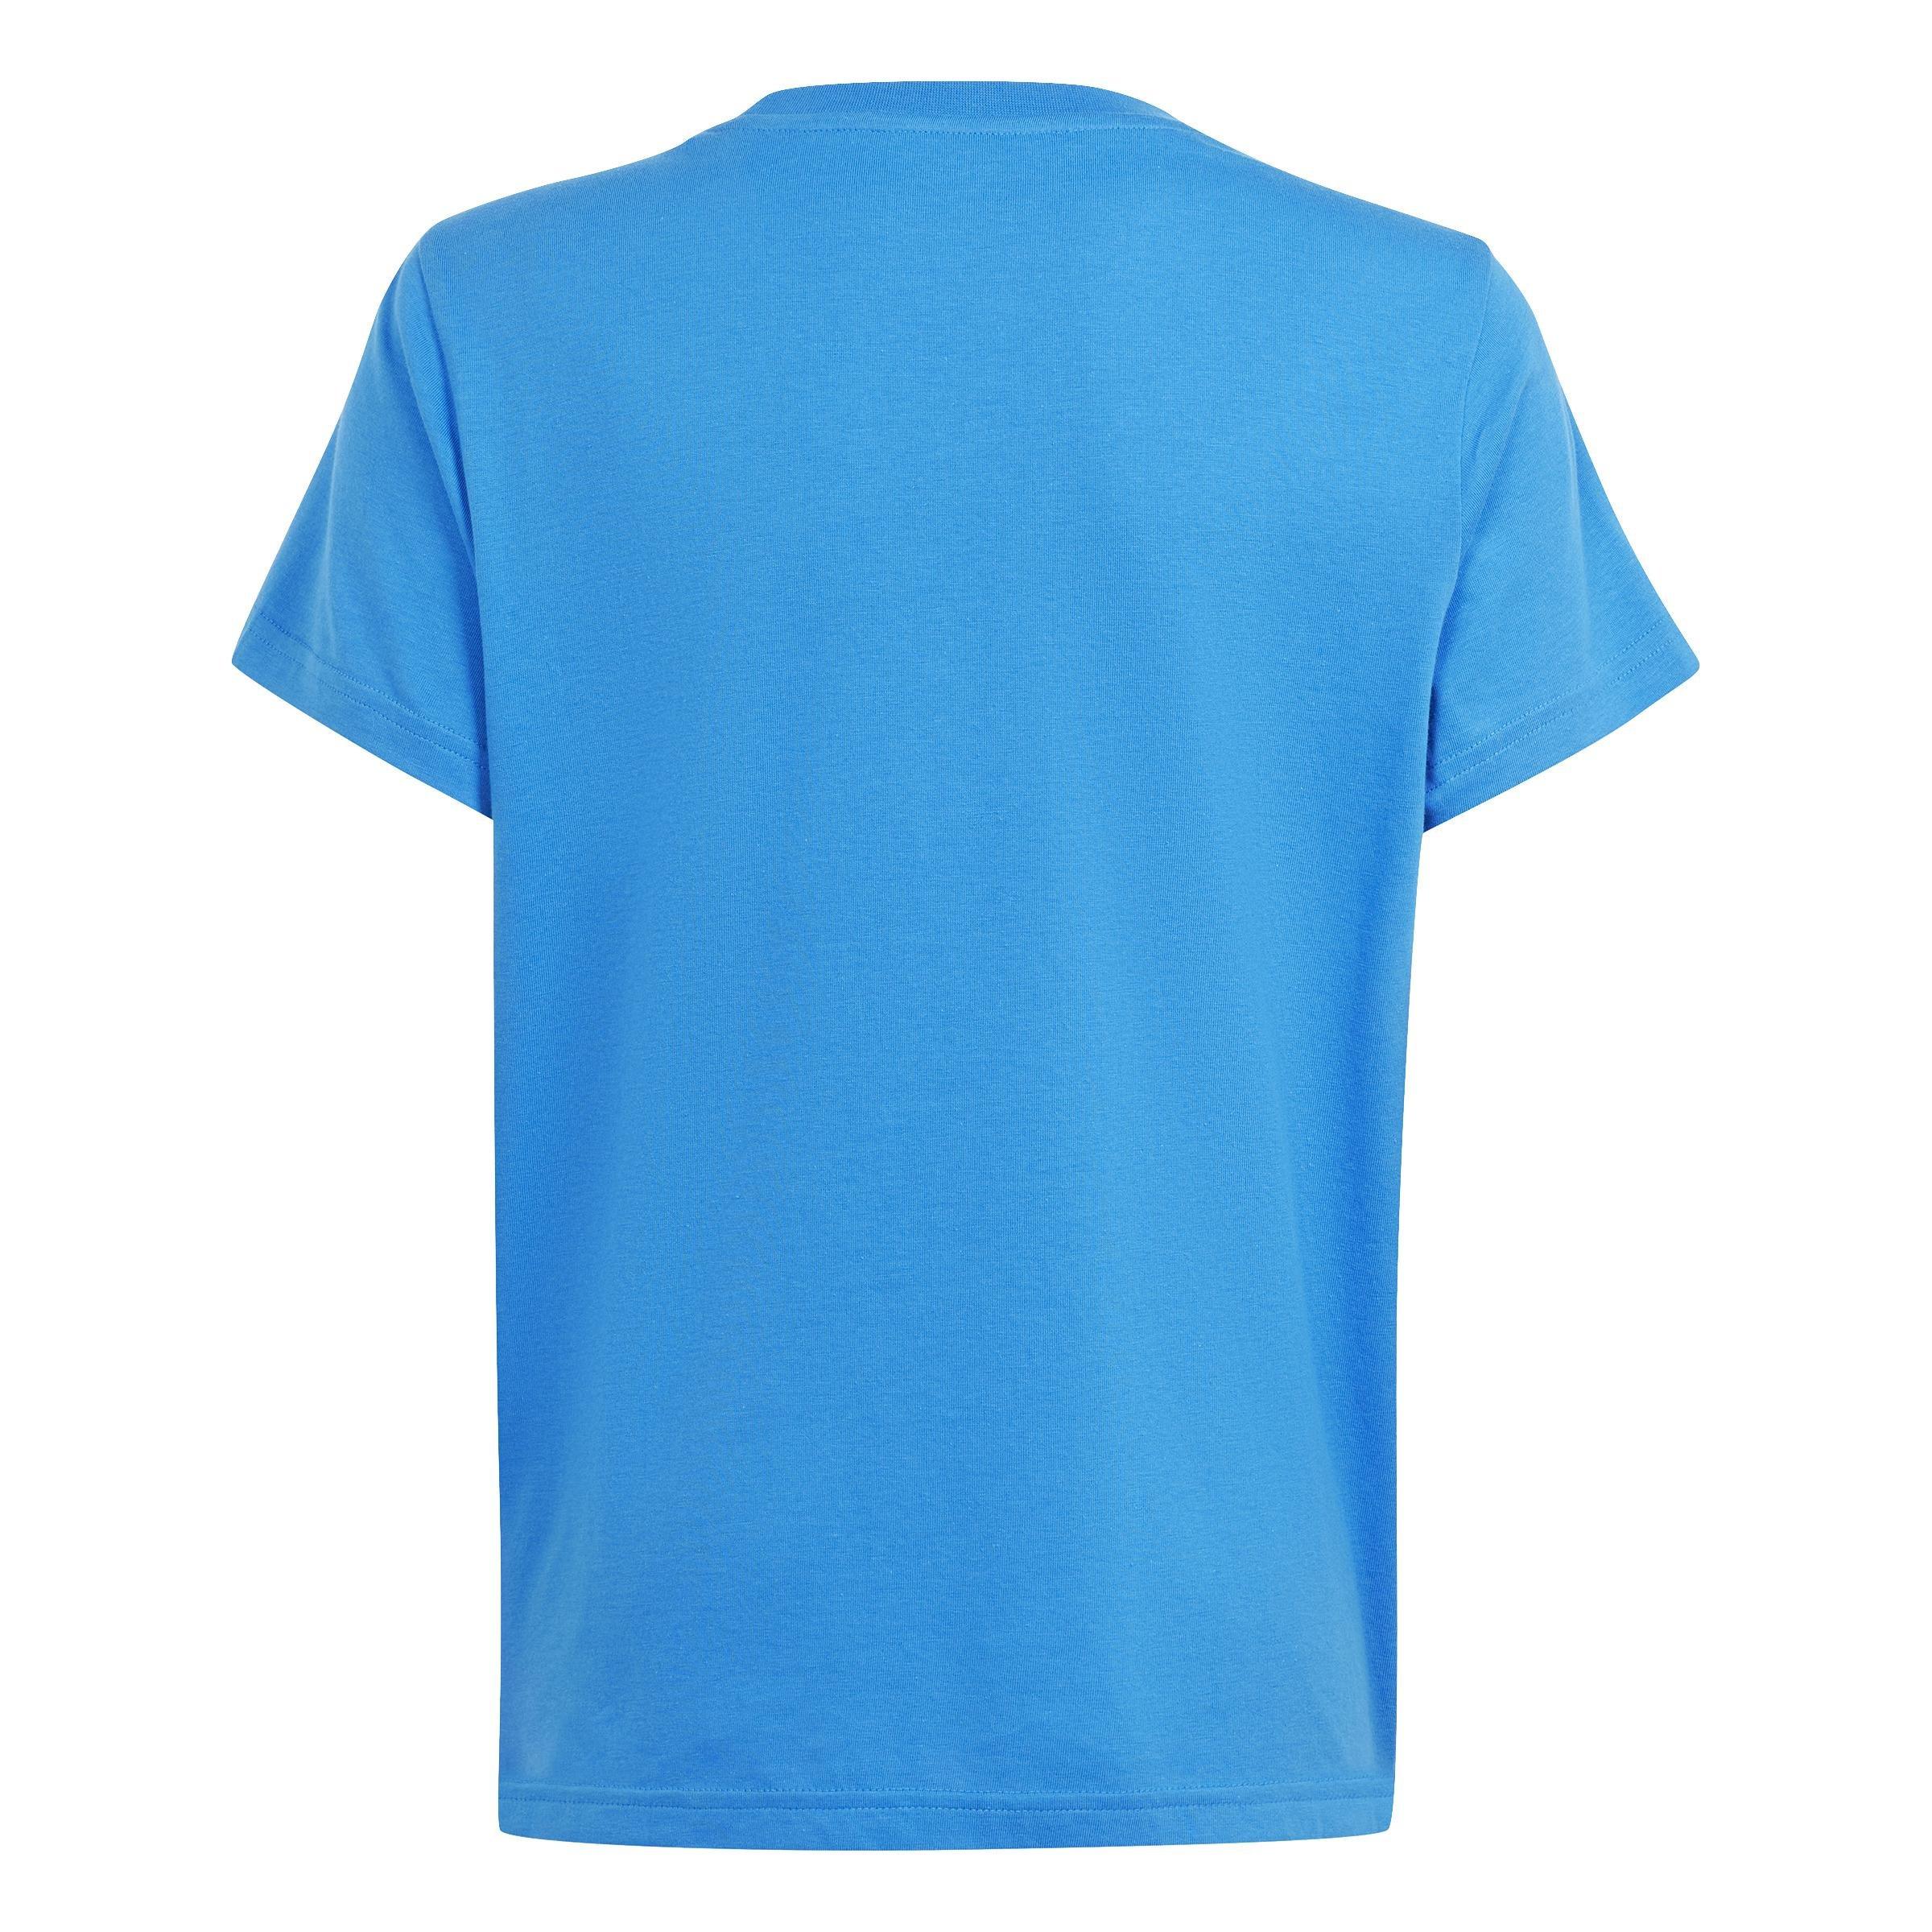 adidas - Unisex Kids Trefoil T-Shirt, Blue